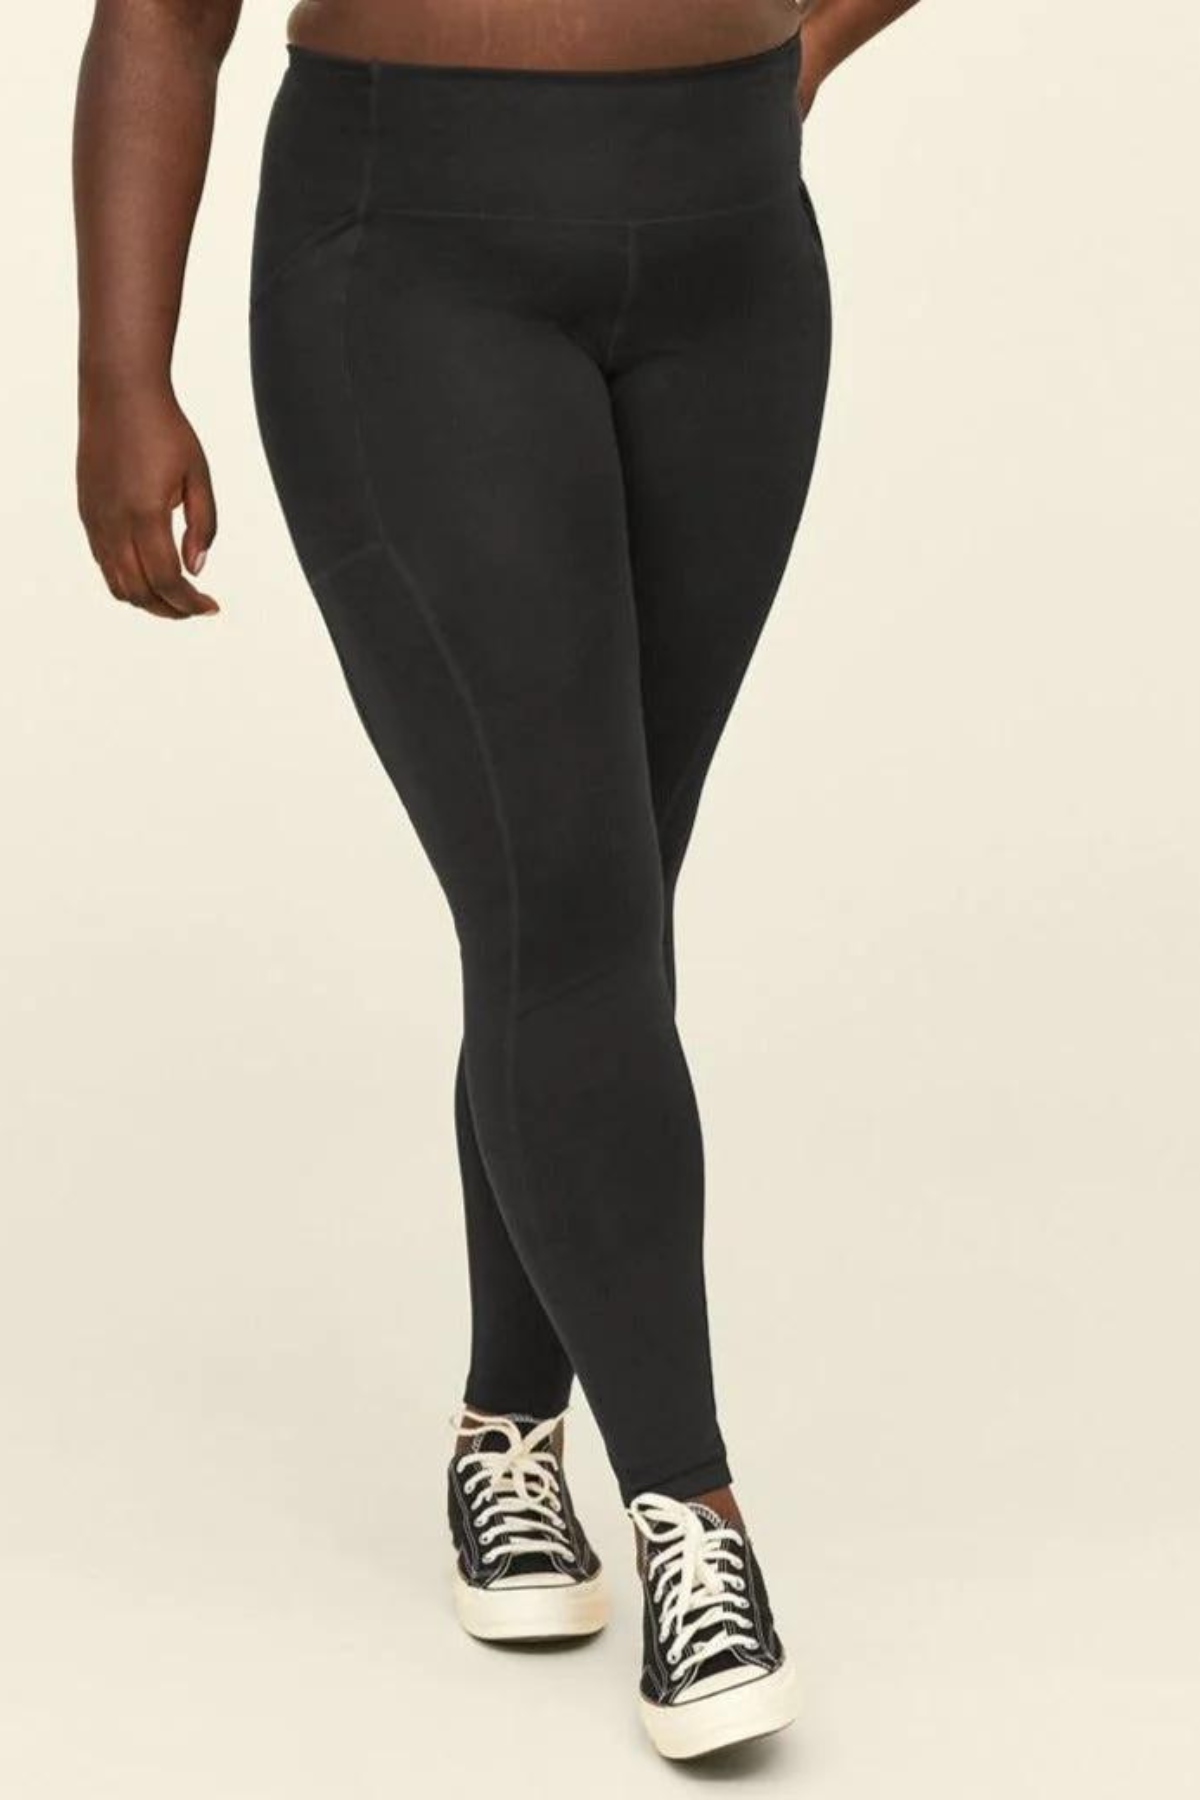 Reversible Leggings Black/Heather Grey RG - Soma